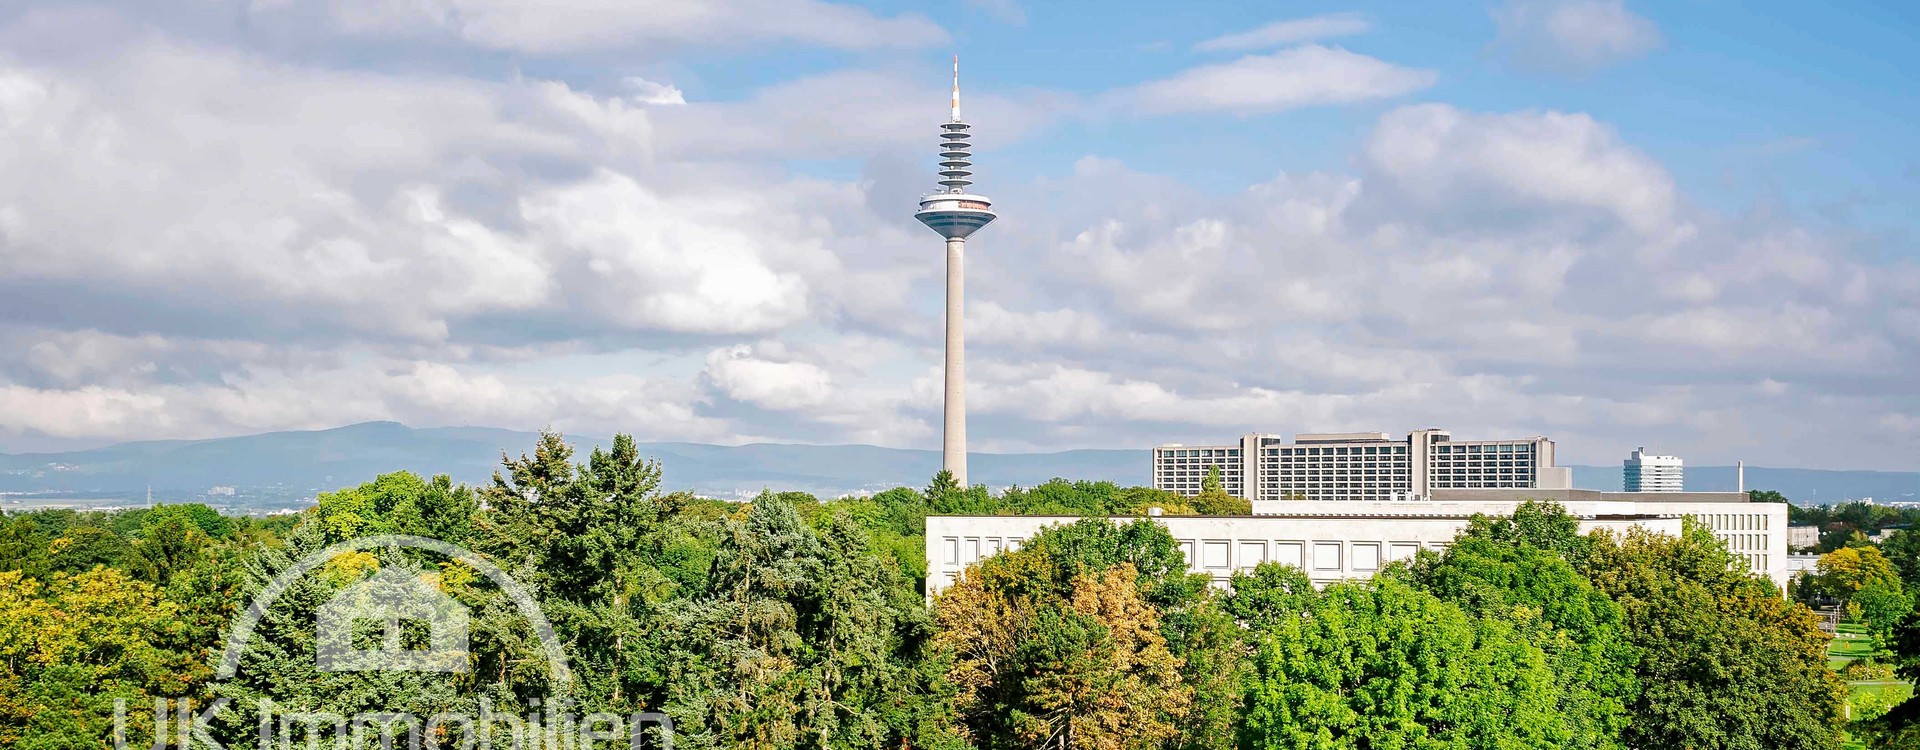 Immobilienmakler-Frankfurt-Ginnheim-Europaturm-Ginnheimer-Spargel-Grüneburgpark.jpg